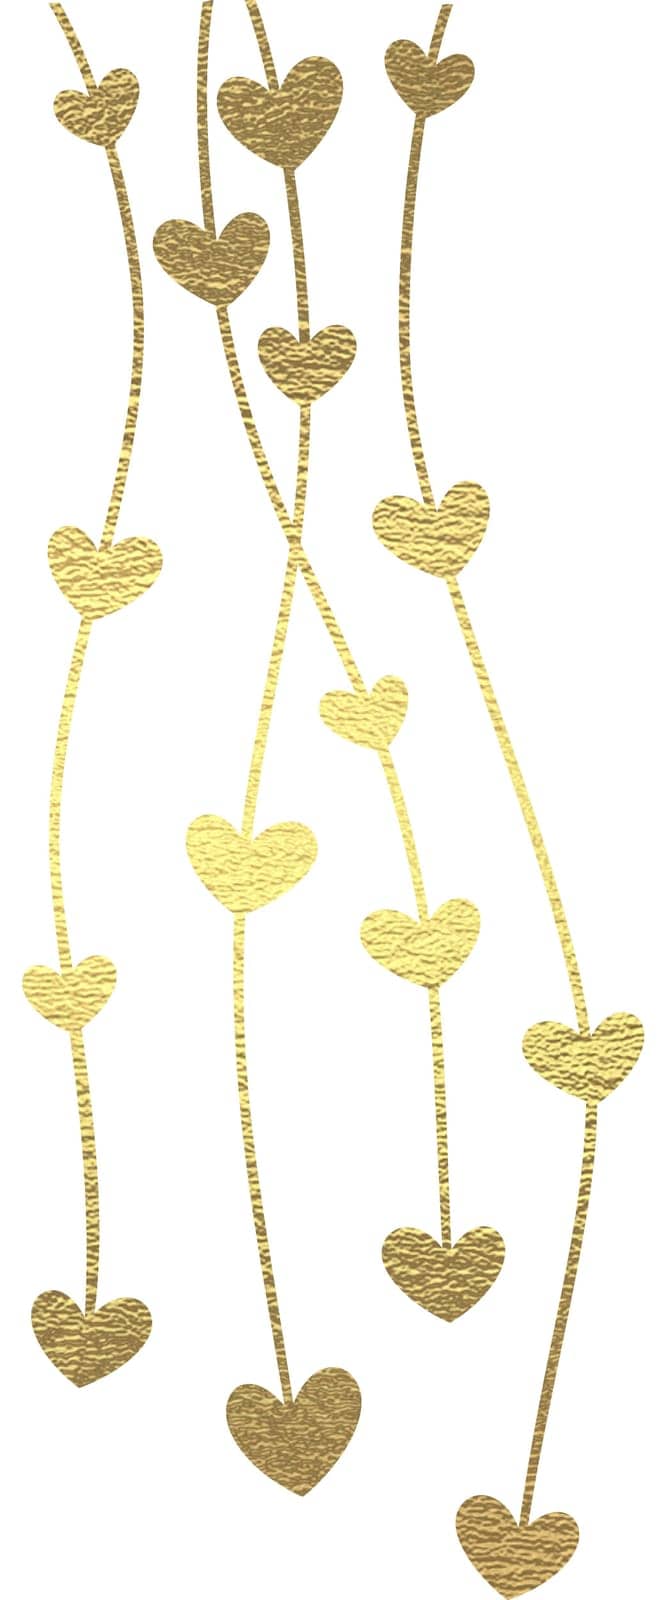 golden heart with transparent background. Gold foil texture.